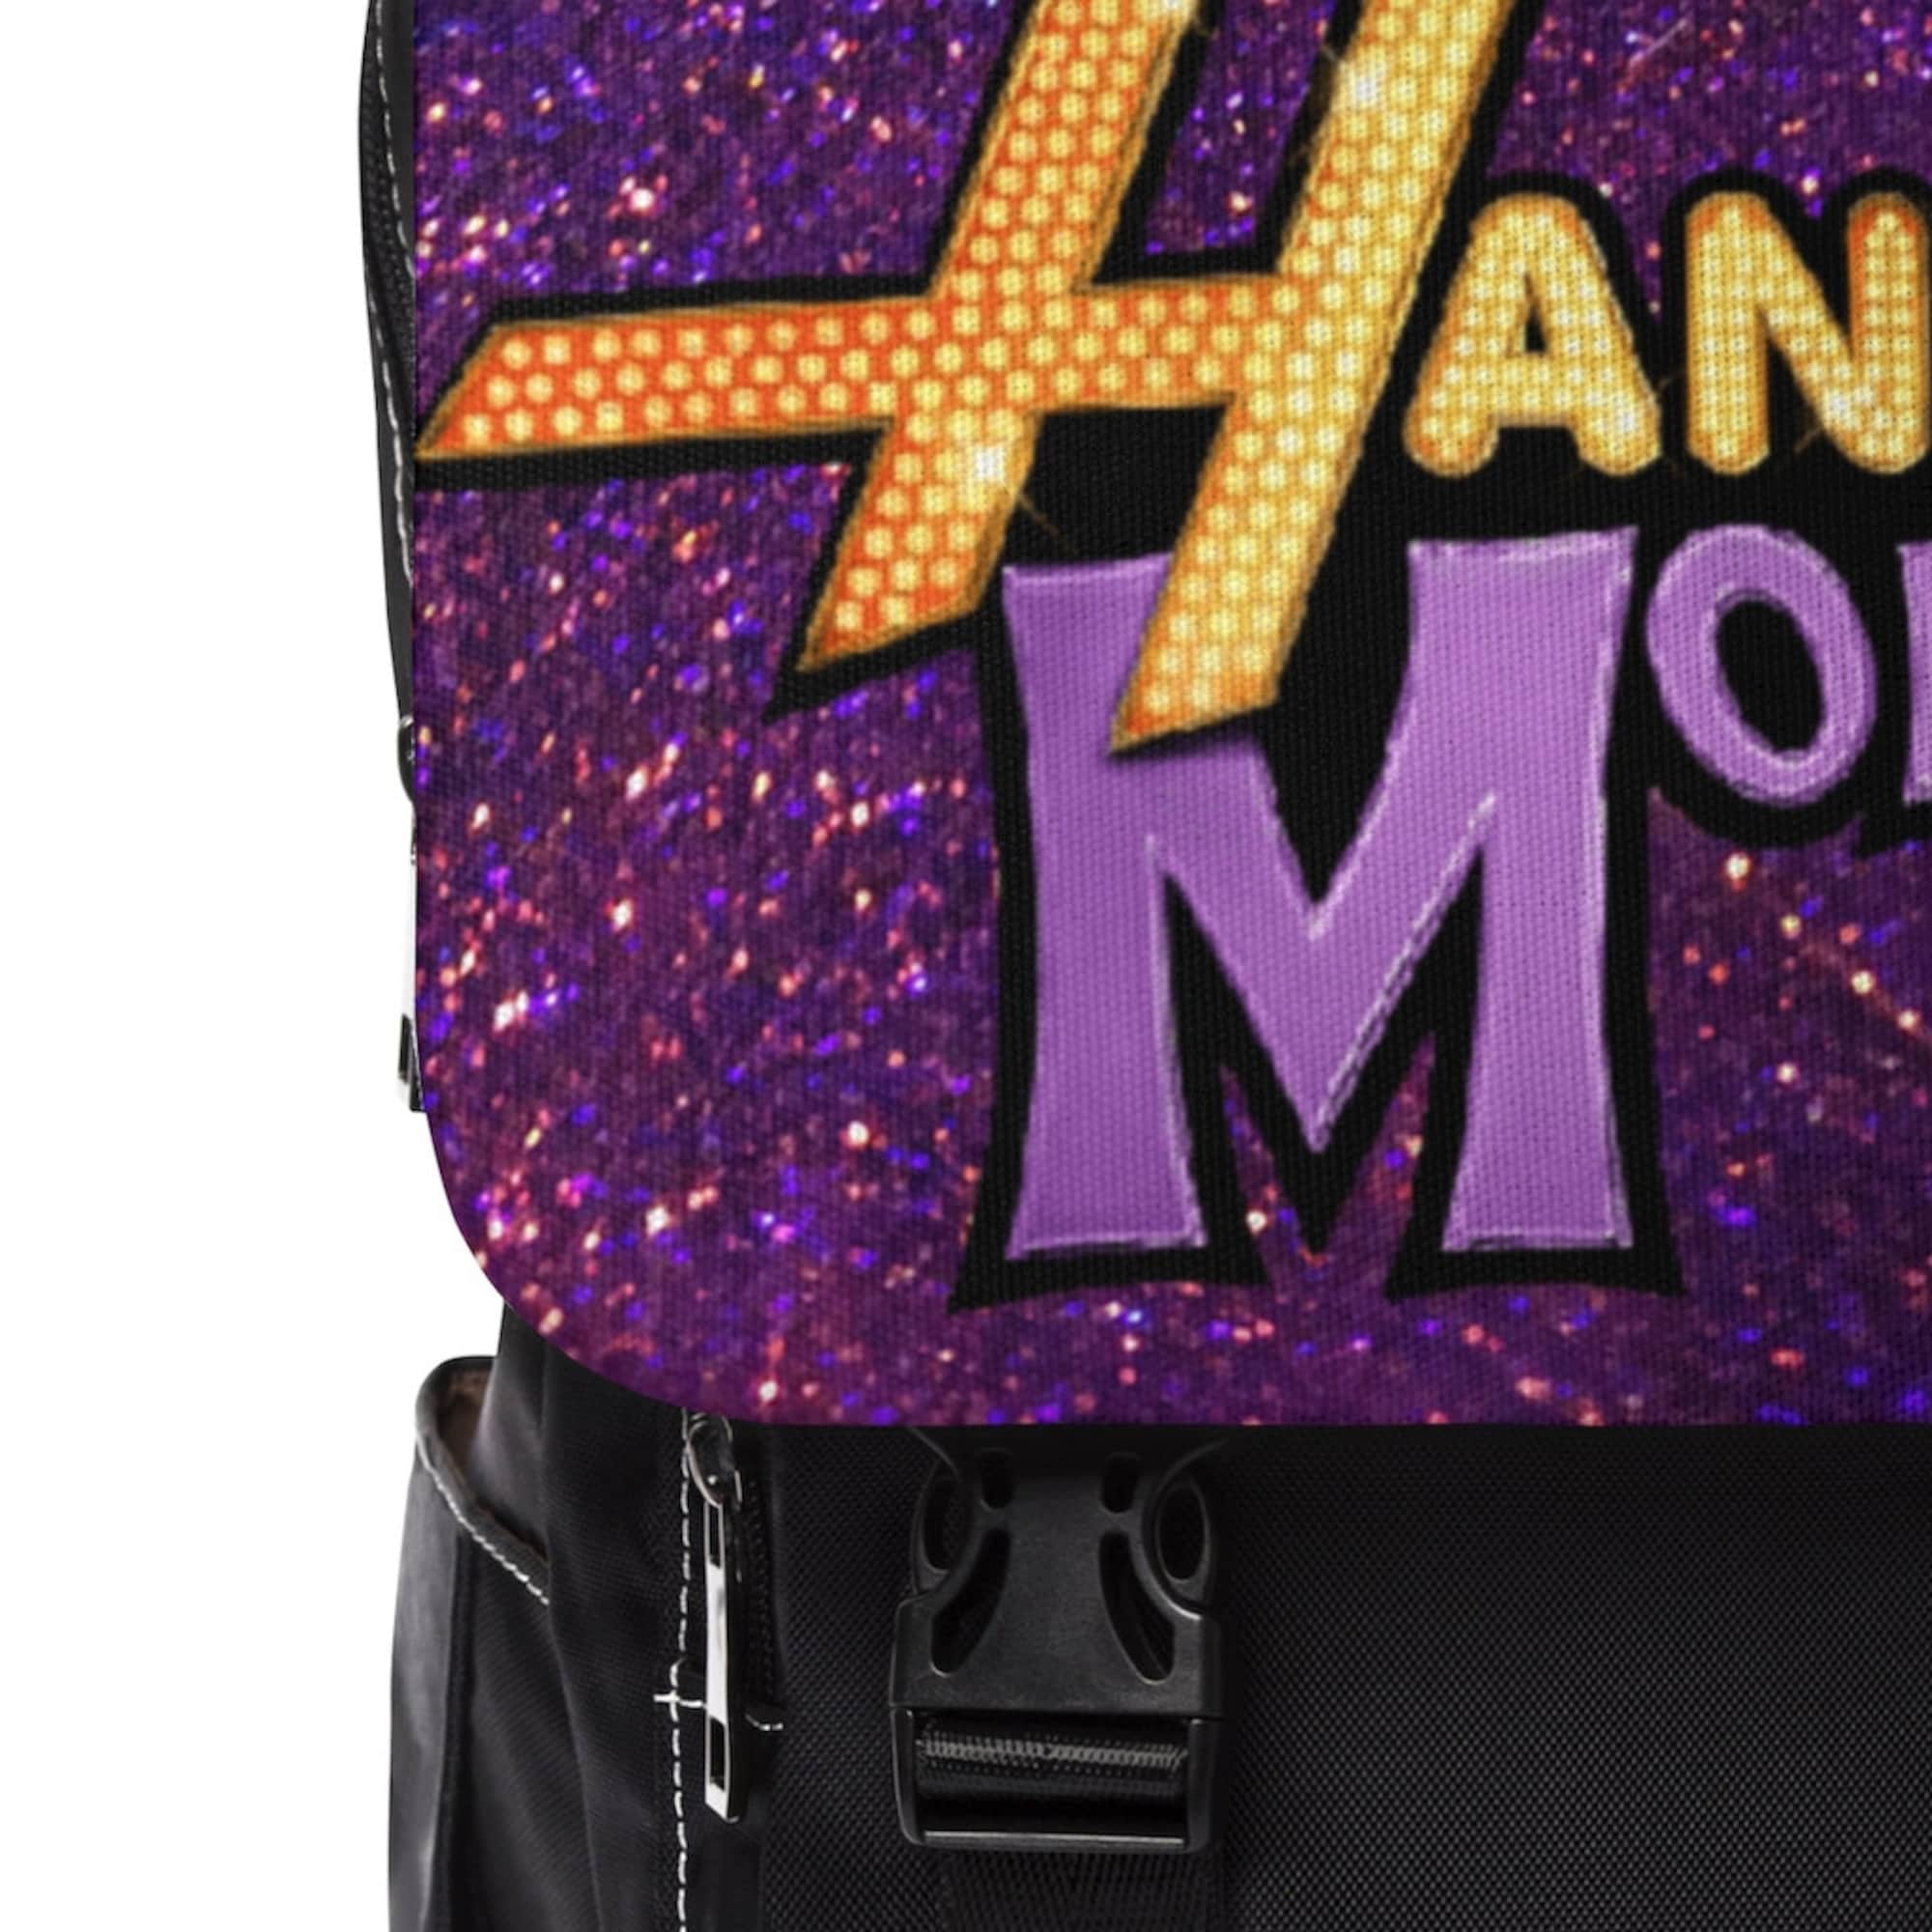 Hannah Montana  Unisex Casual Shoulder Backpack